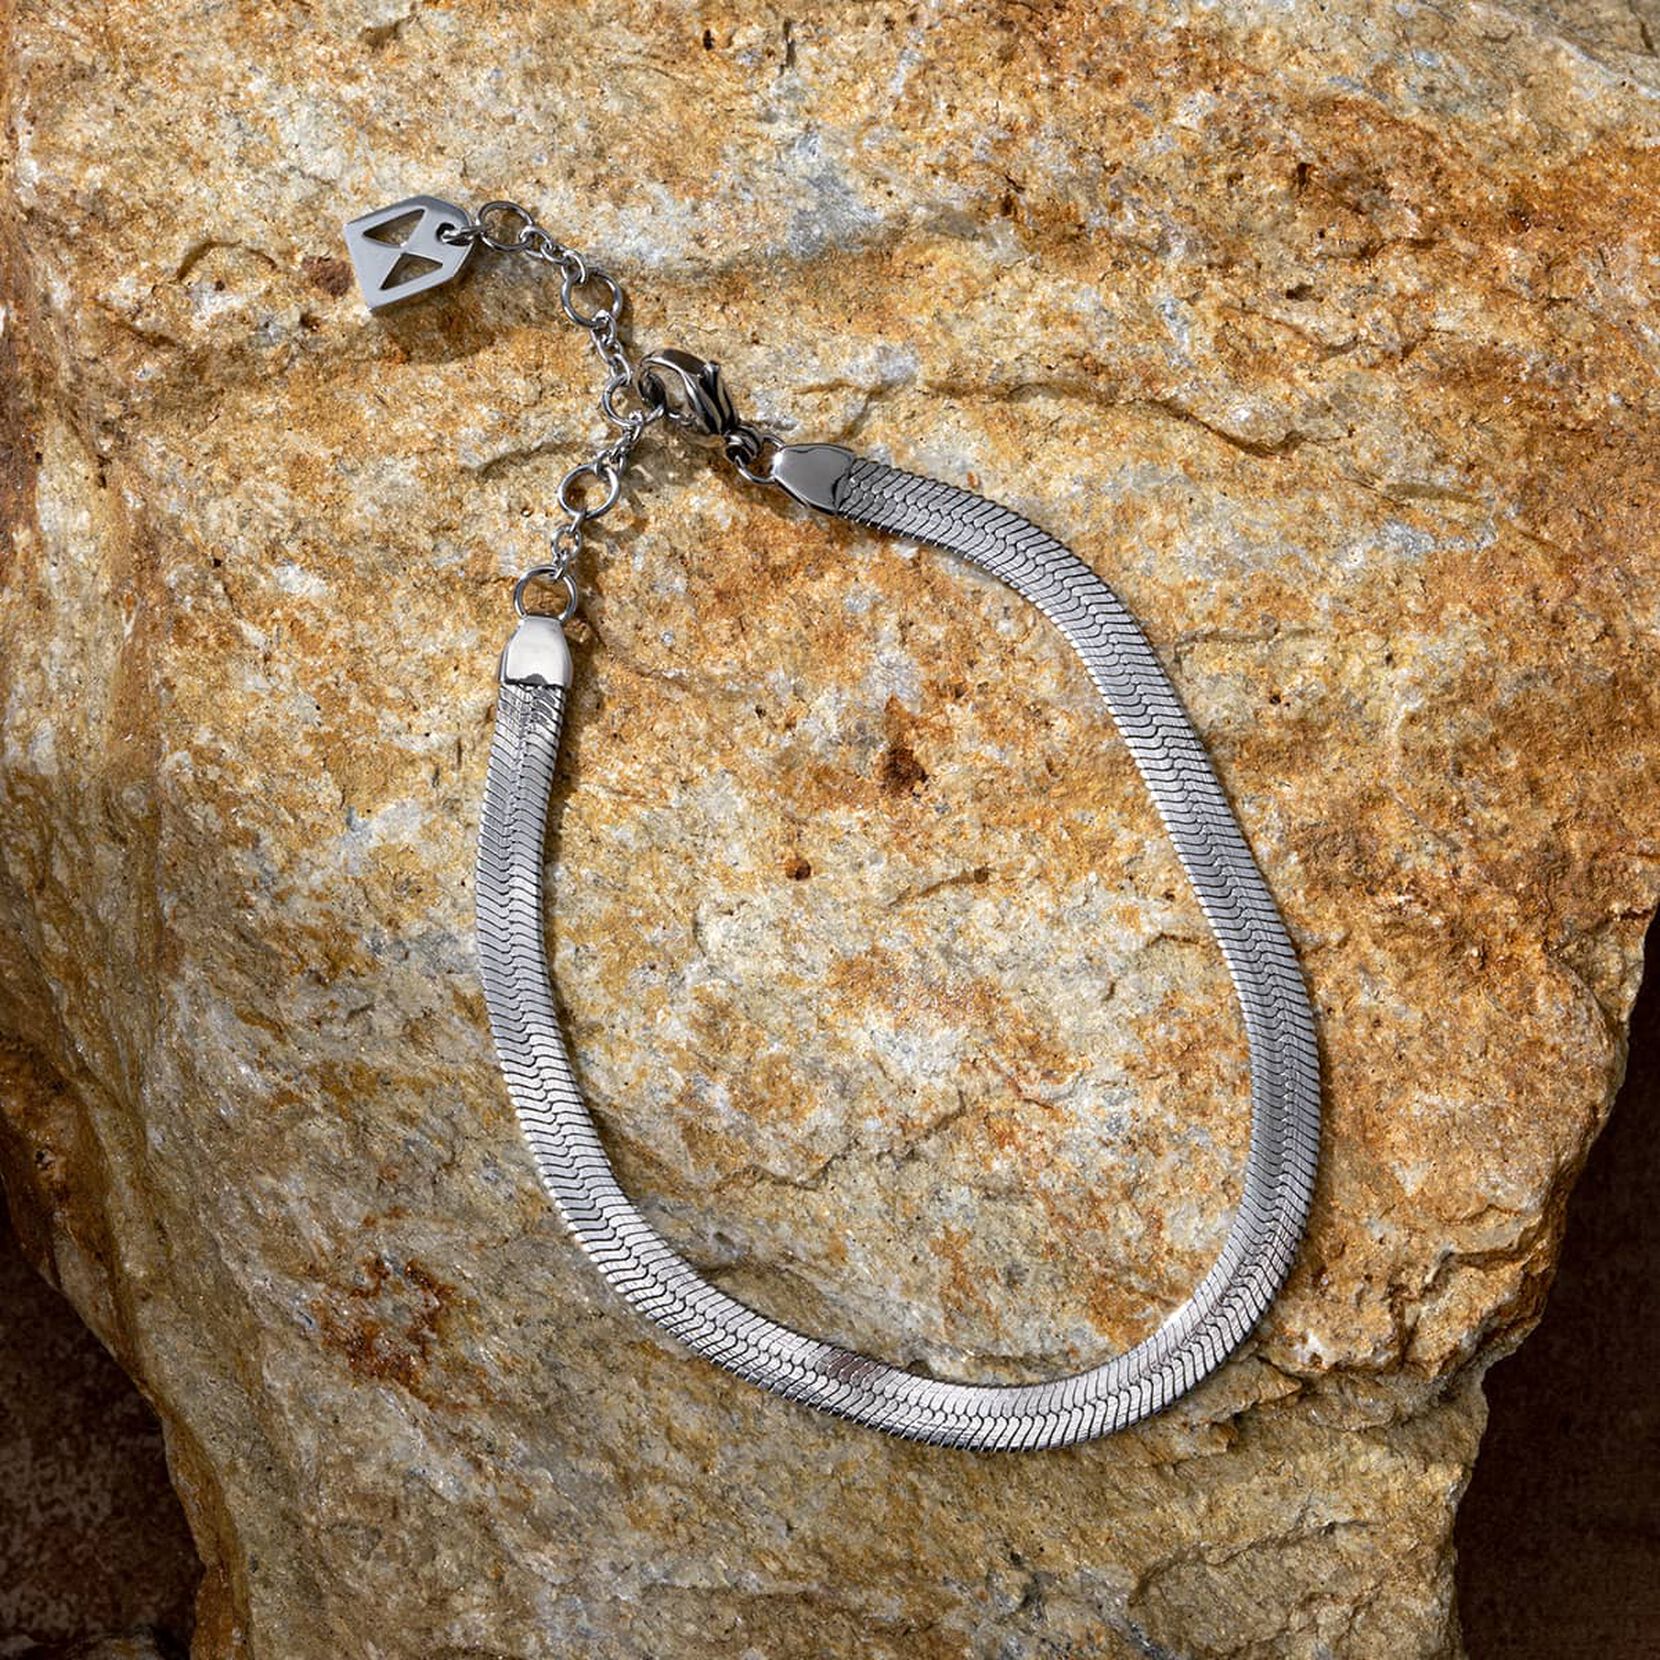 Herringbone Bracelet